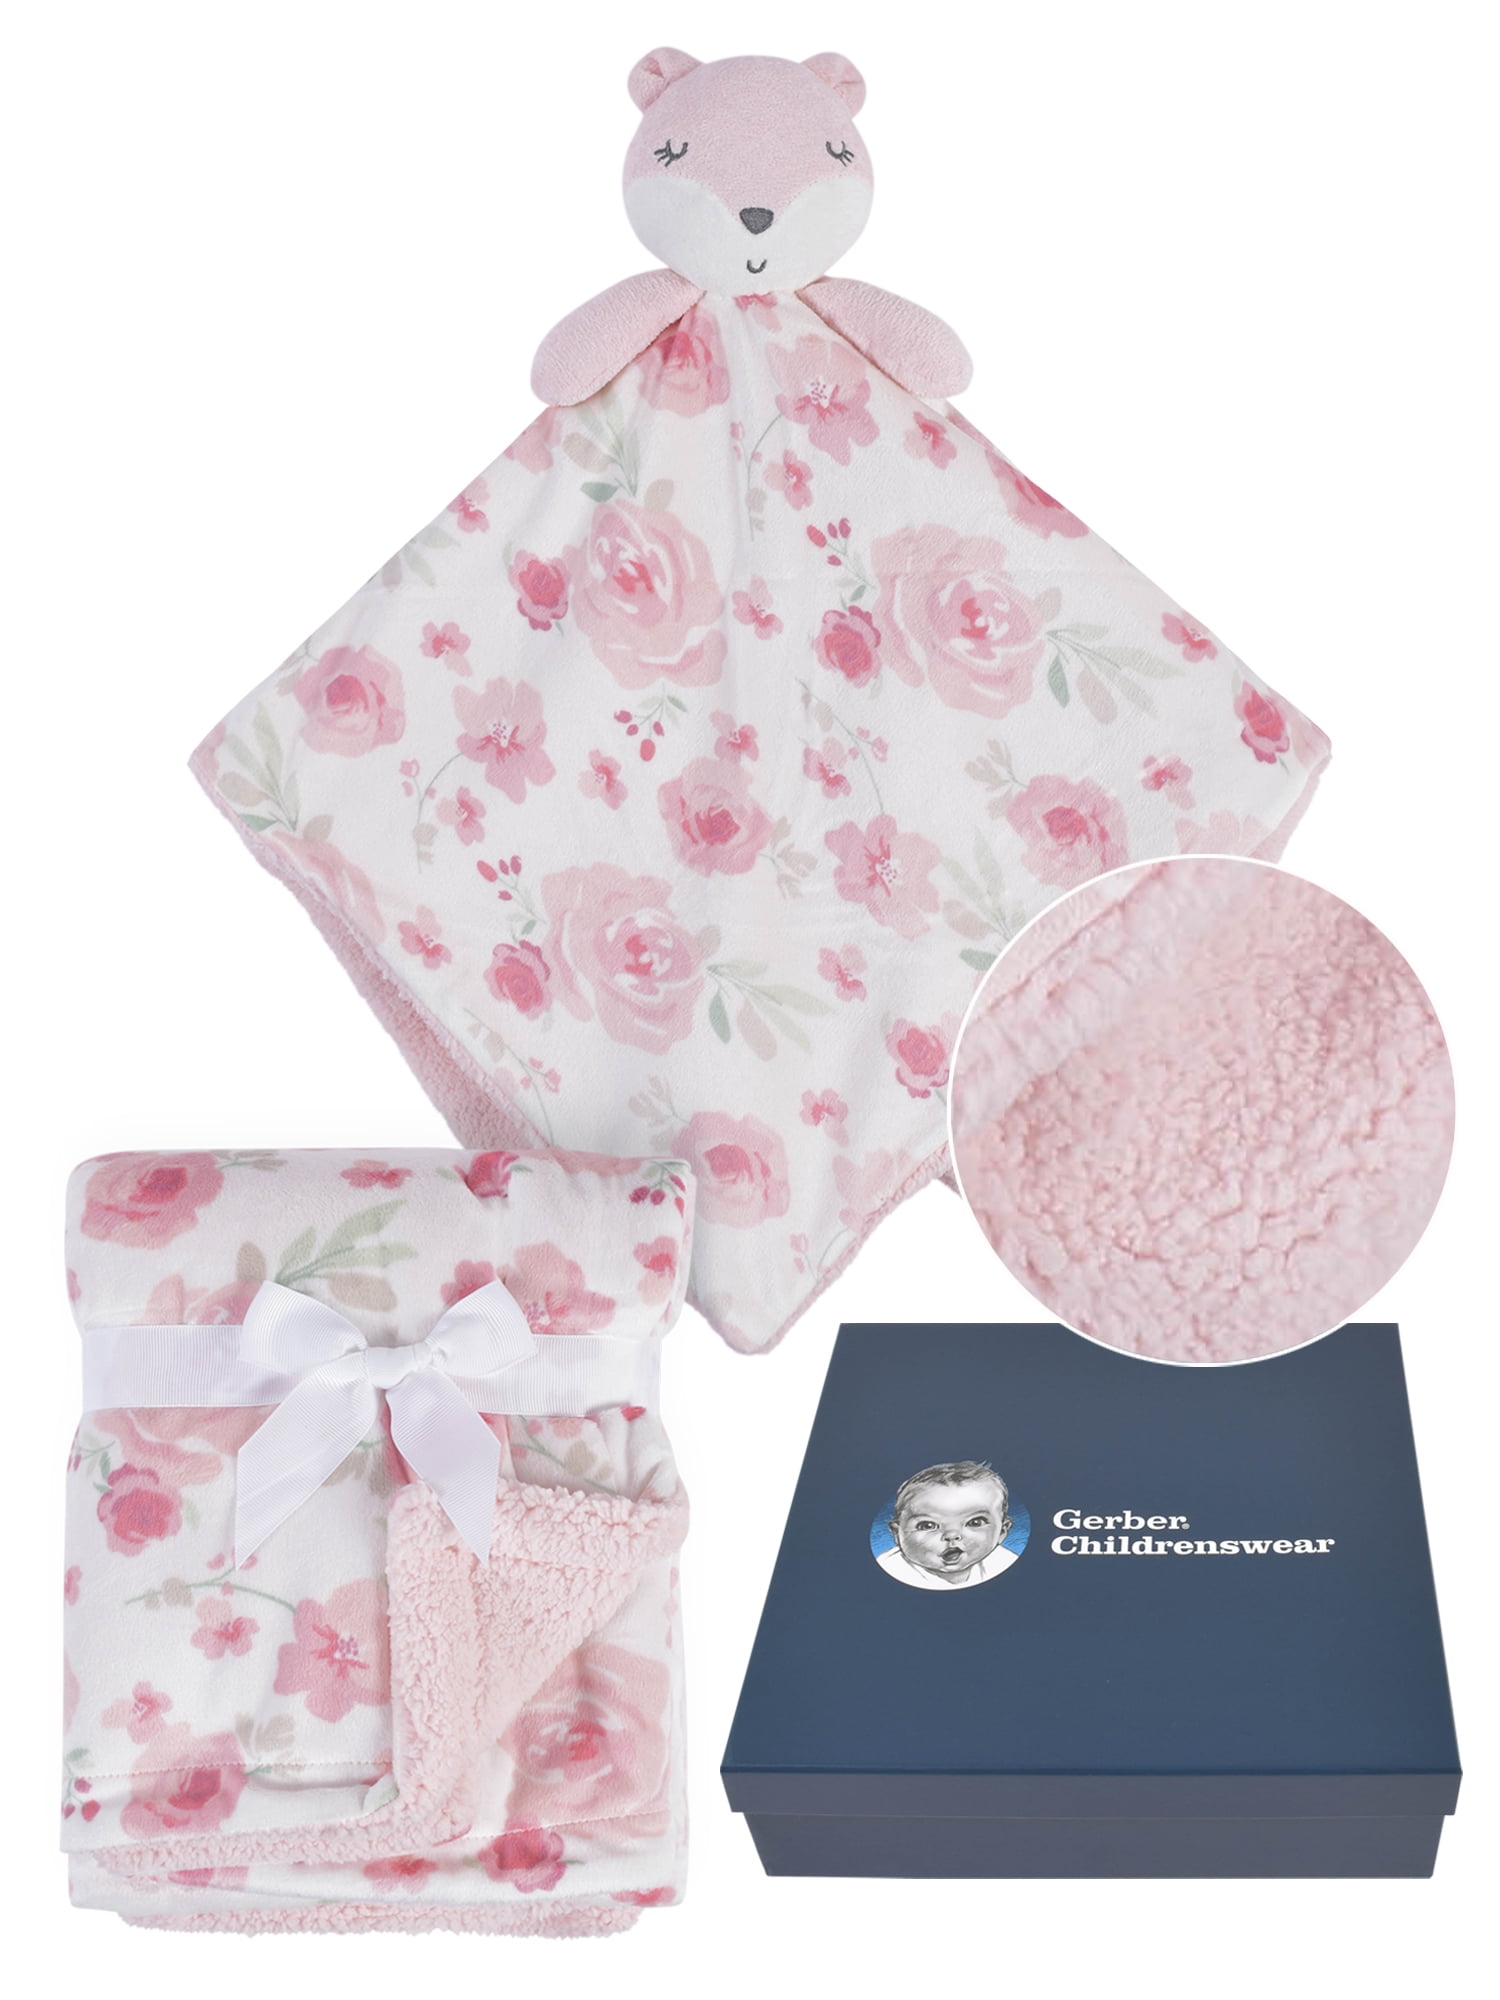 Gerber Baby Super Soft Plush Blanket & XL Security Blanket Set w/ Gift Box (Pink) $12.45  + Free S&H w/ Walmart+ or $35+